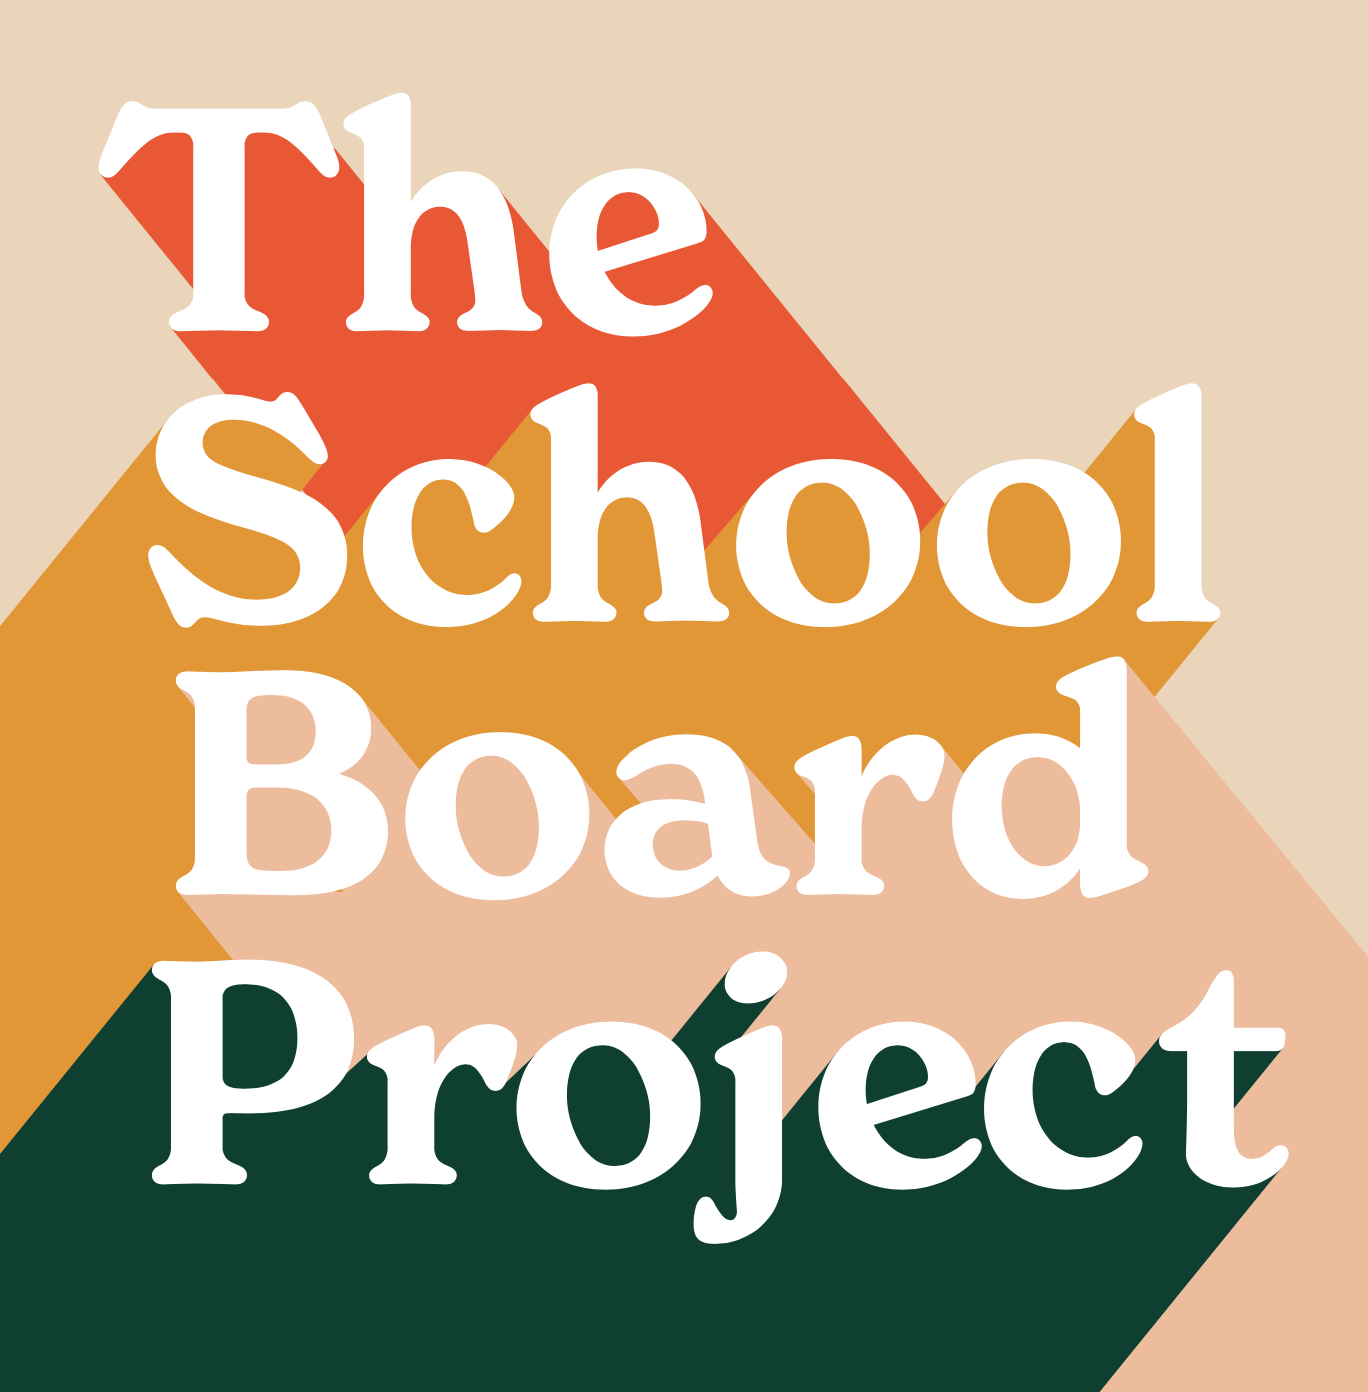 The School Board Project